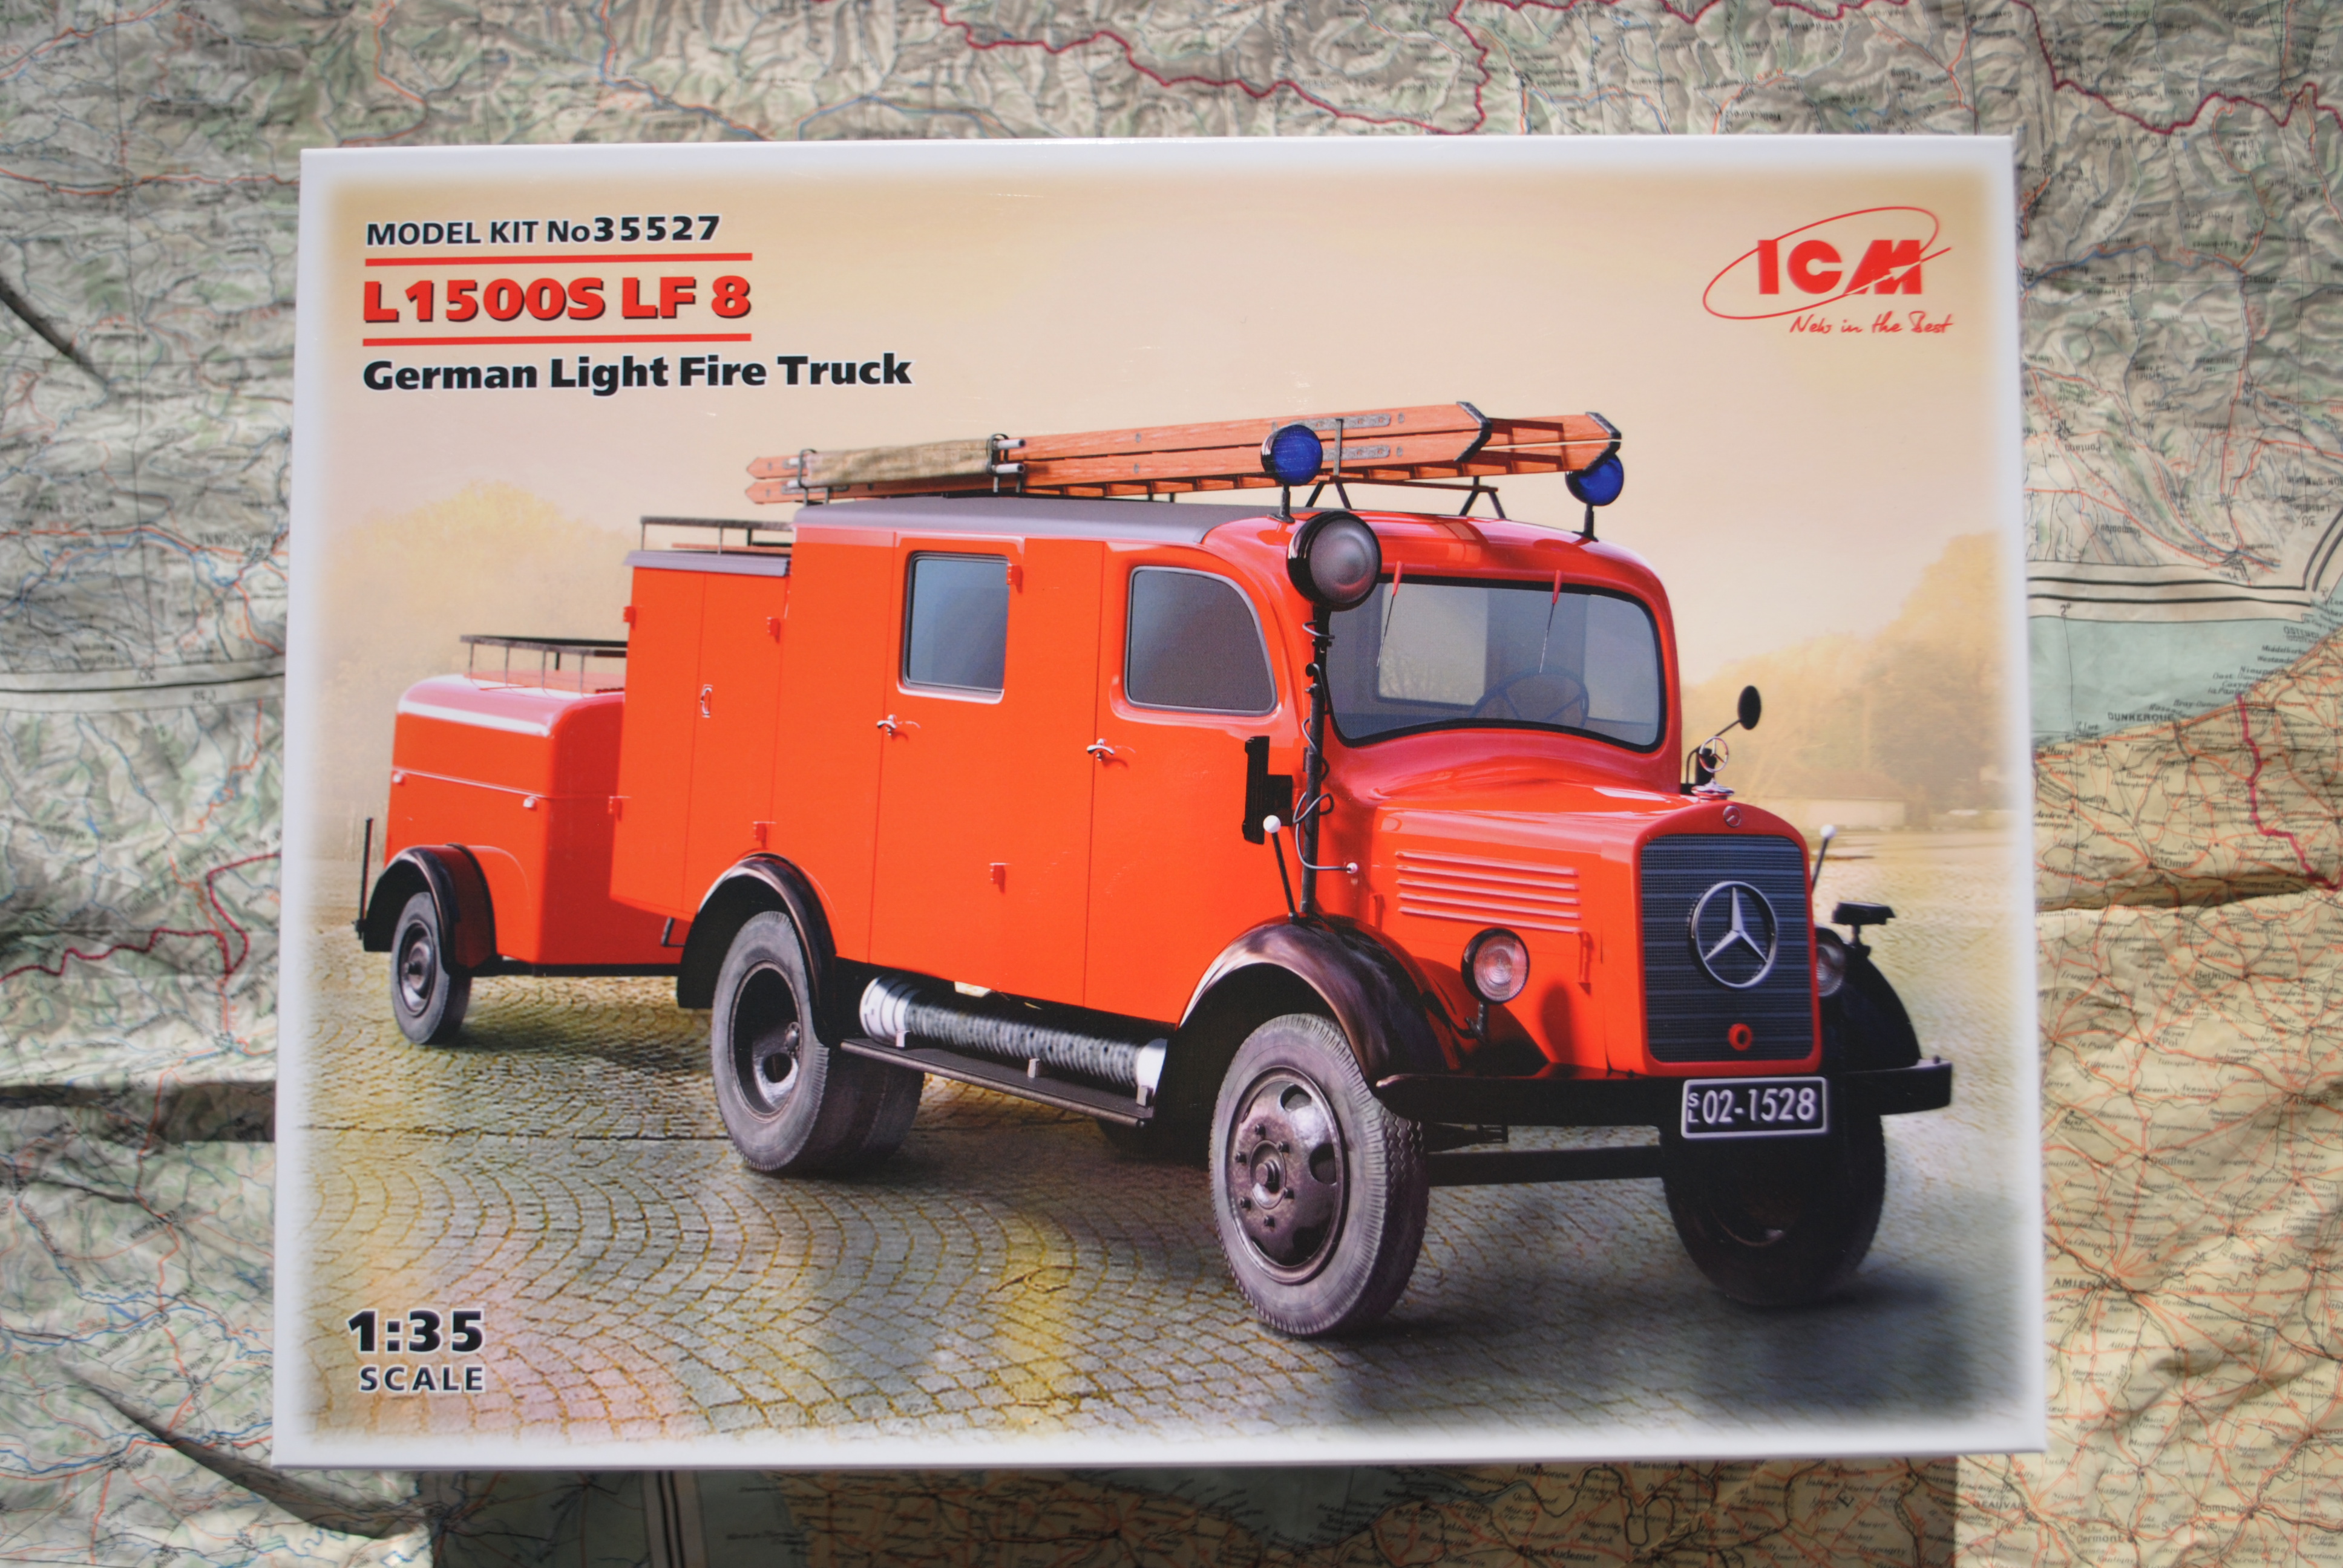 ICM 35527 Mercedes-Benz L 1500S LF 8 WWII German Light Fire Truck